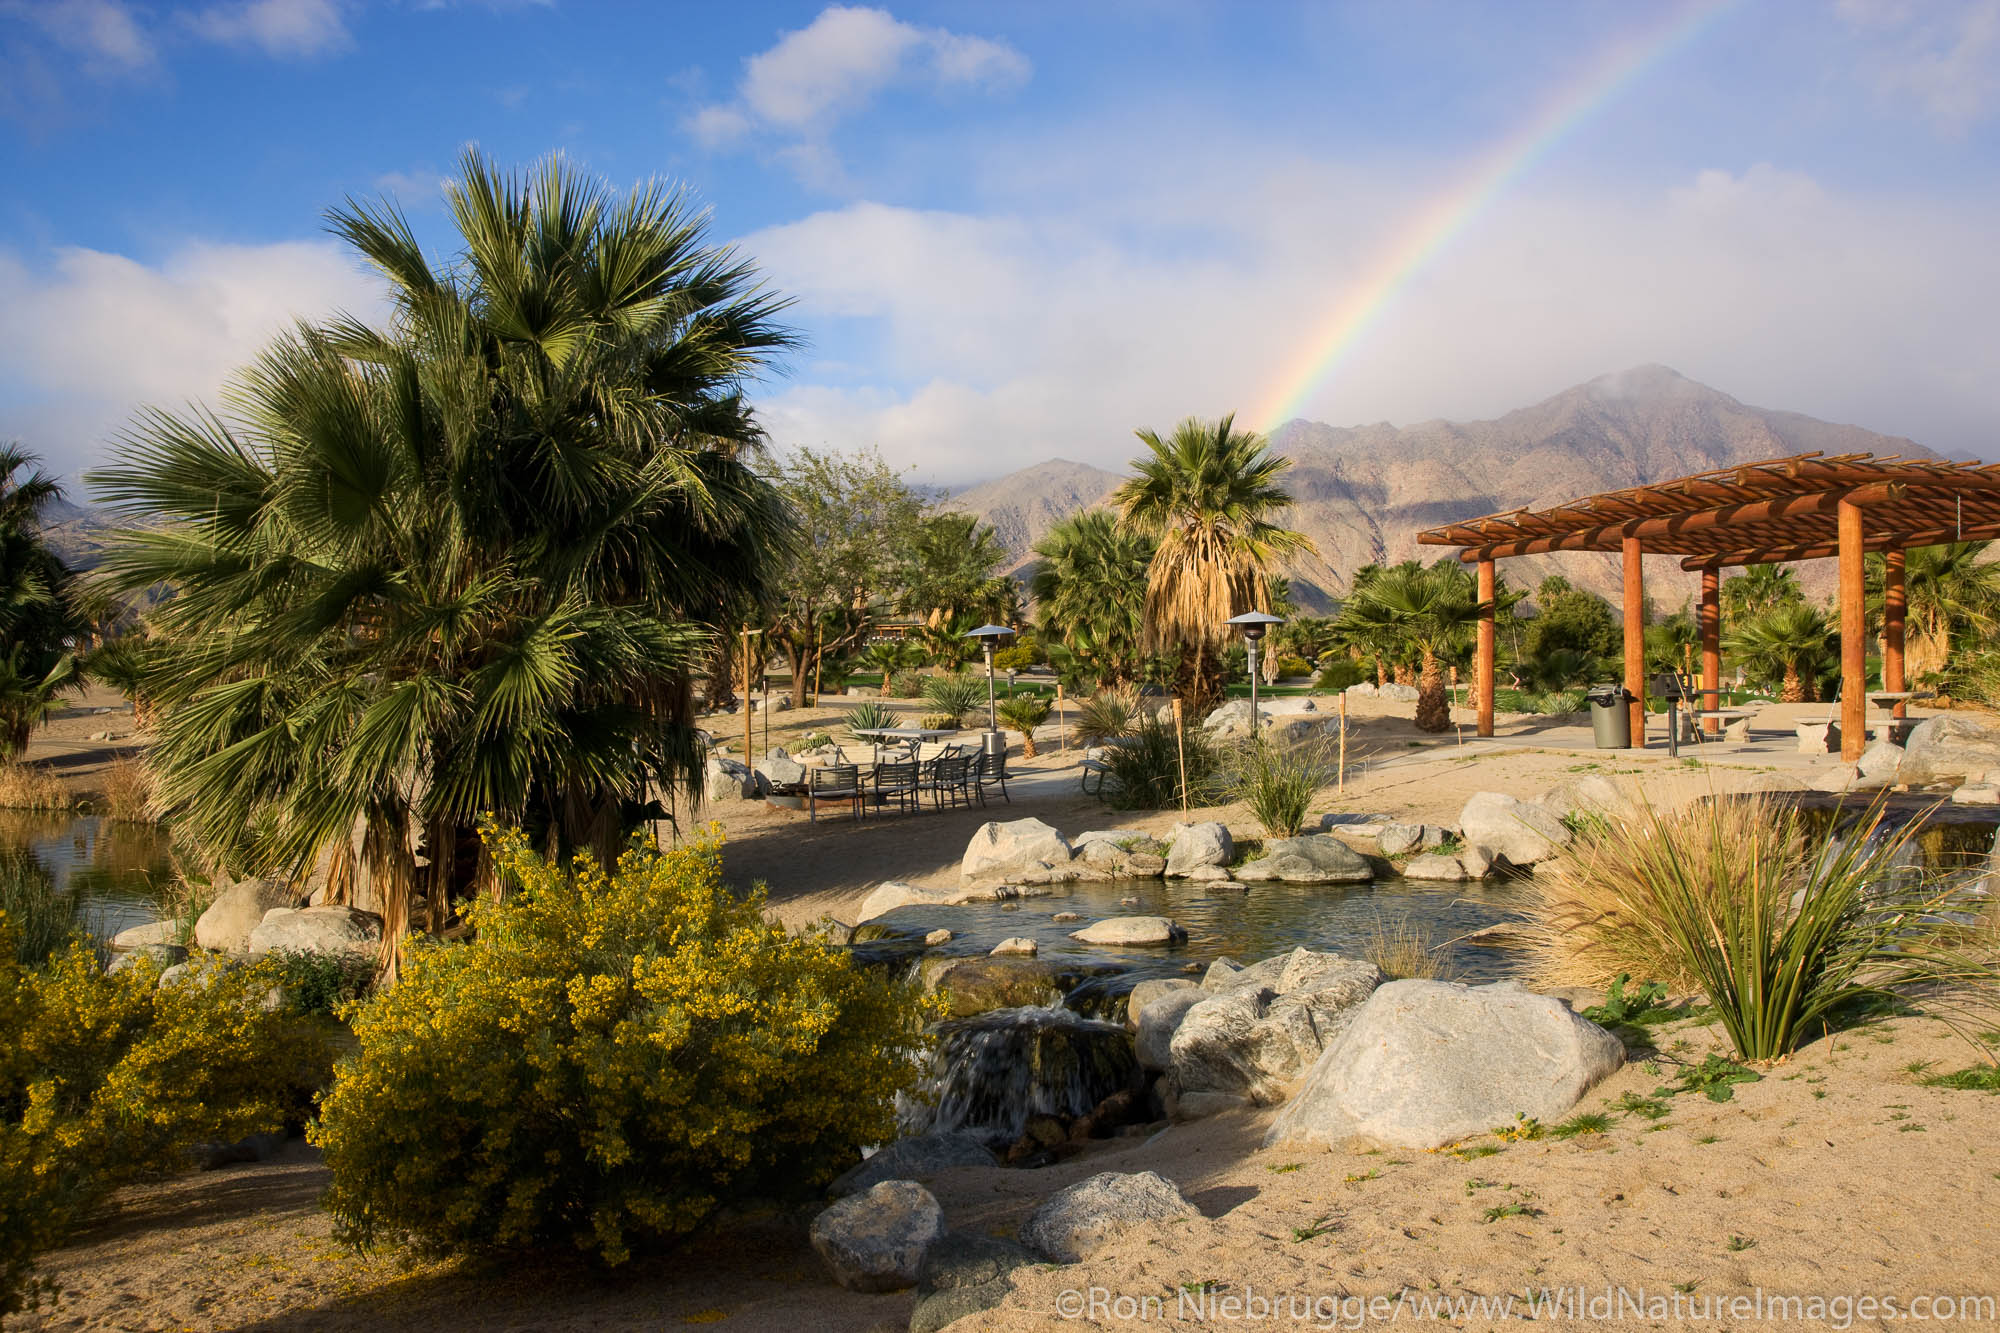 A rainbow at The Springs at Borrego RV Resort and Golf Course, Borrego Springs, California.